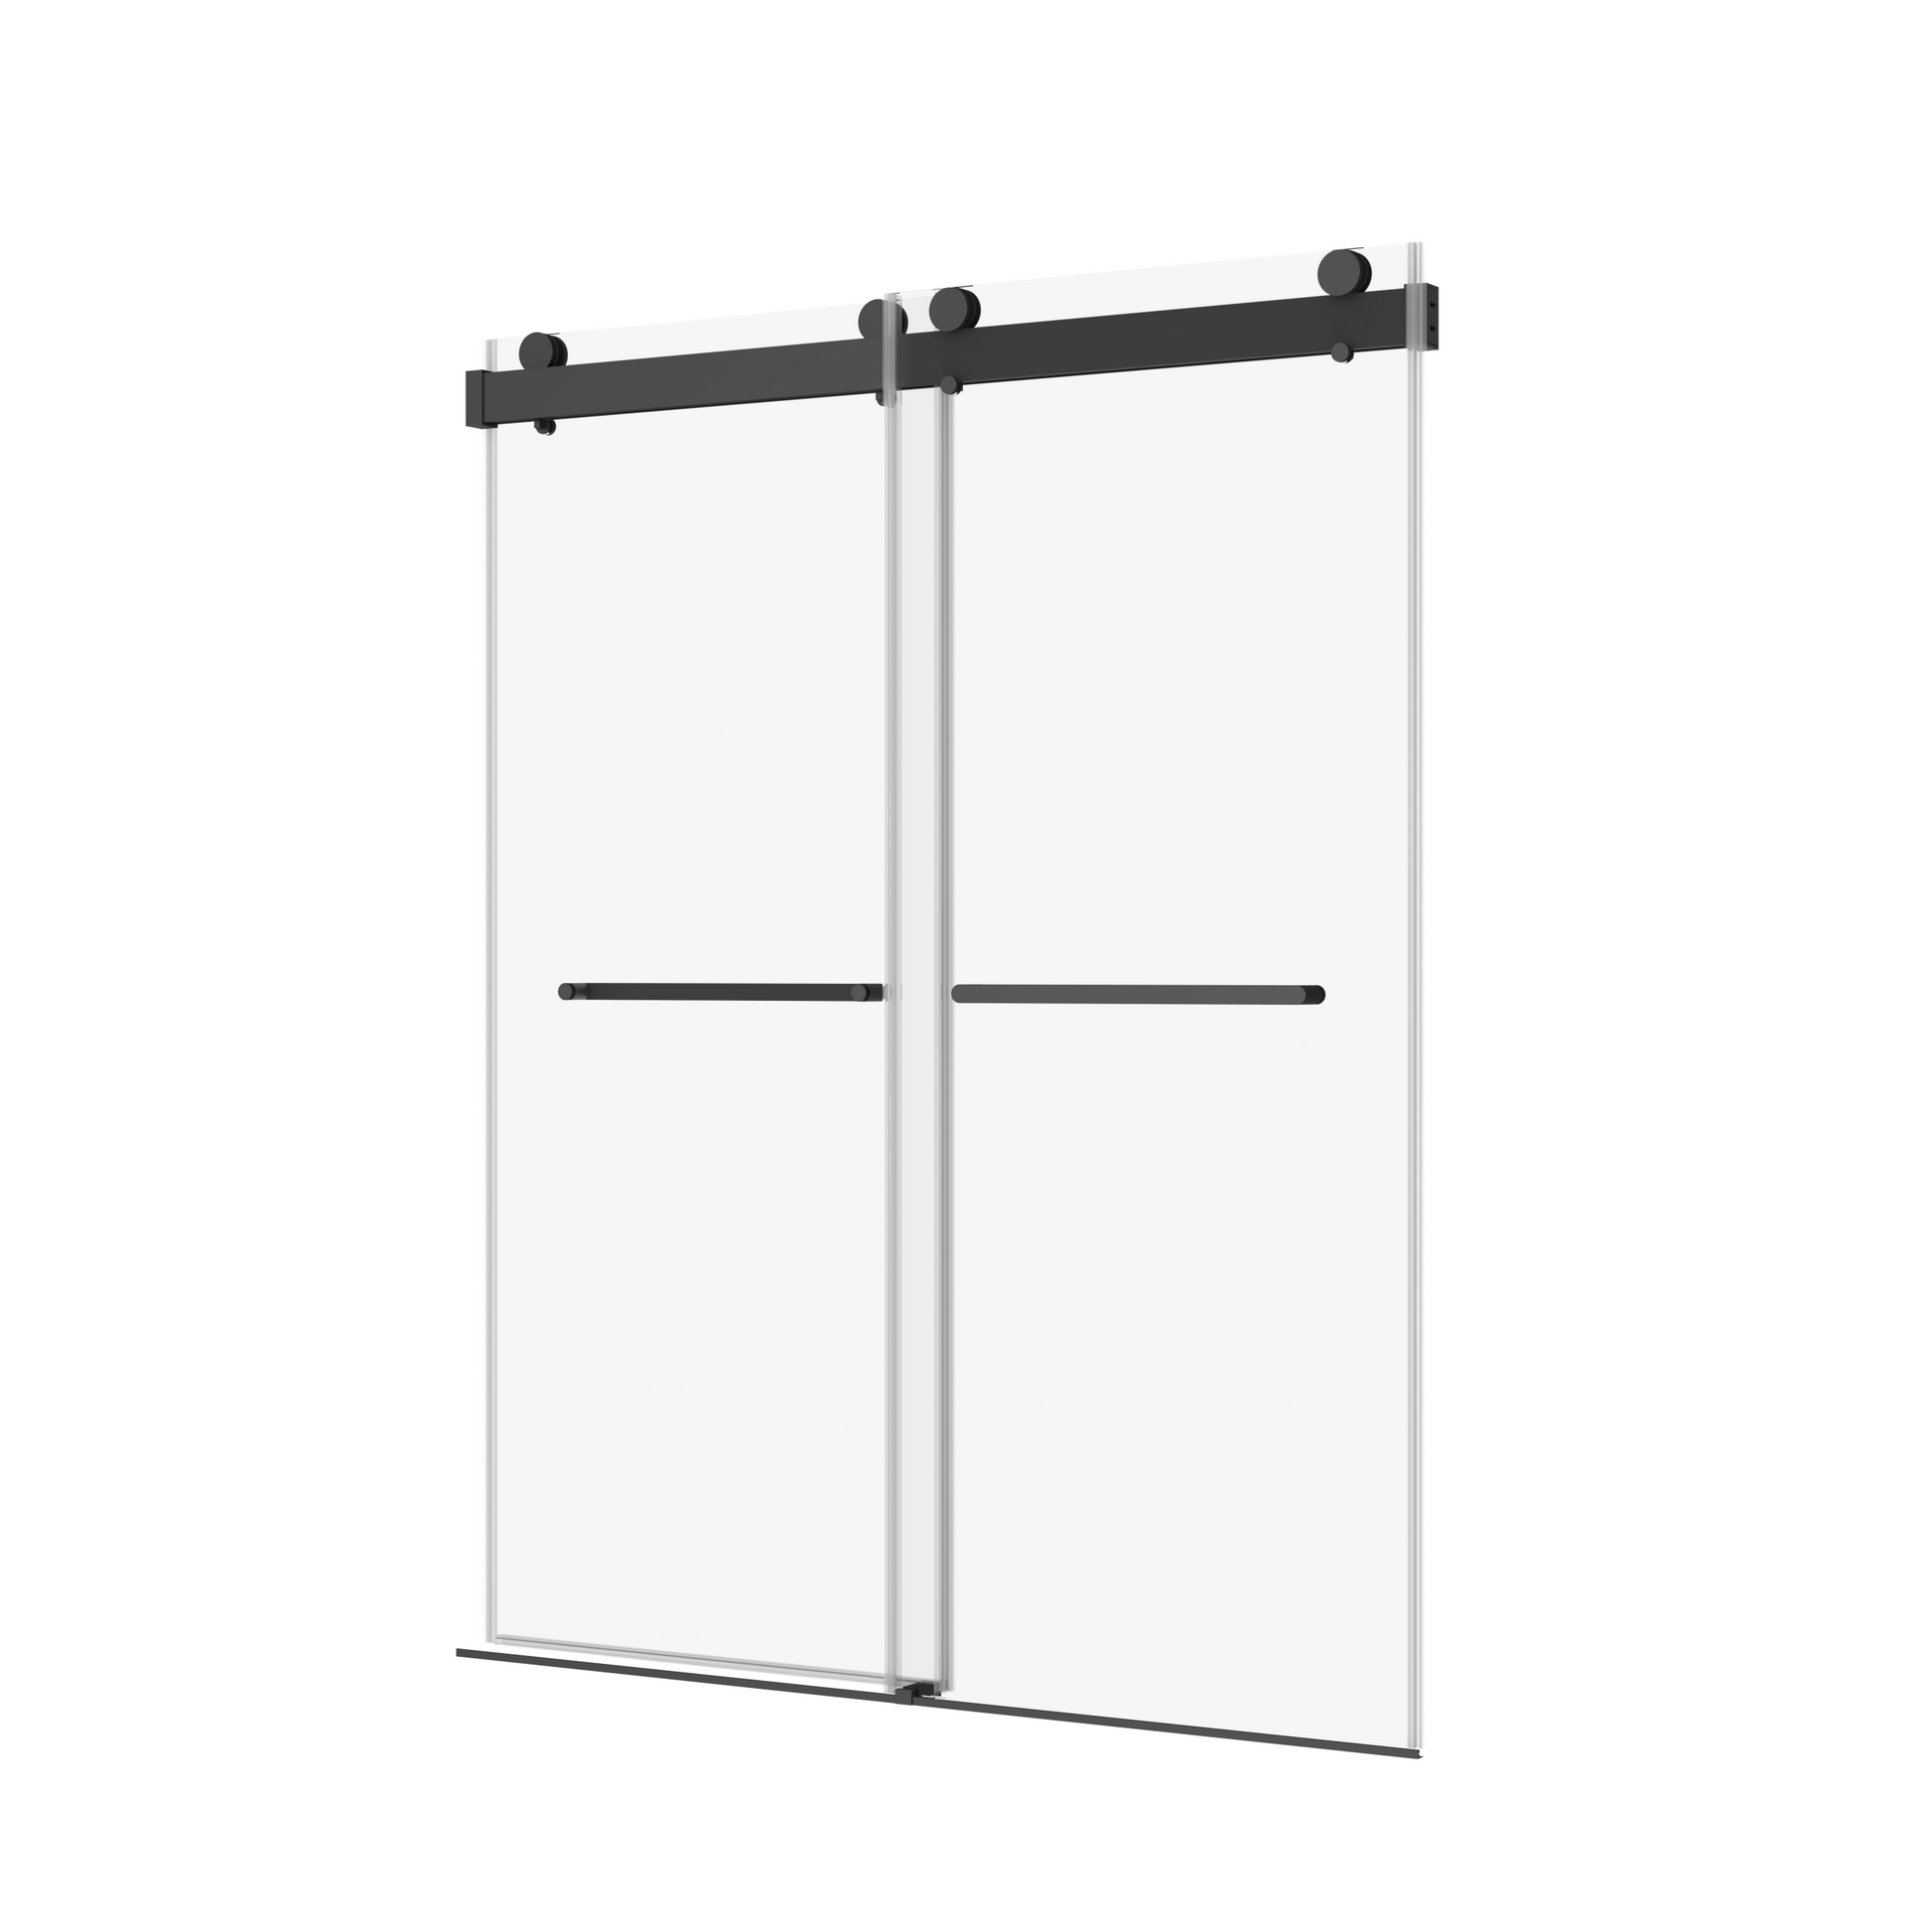 Shower Door Bottom Seal Durable and Flexible Seal matte black-stainless steel